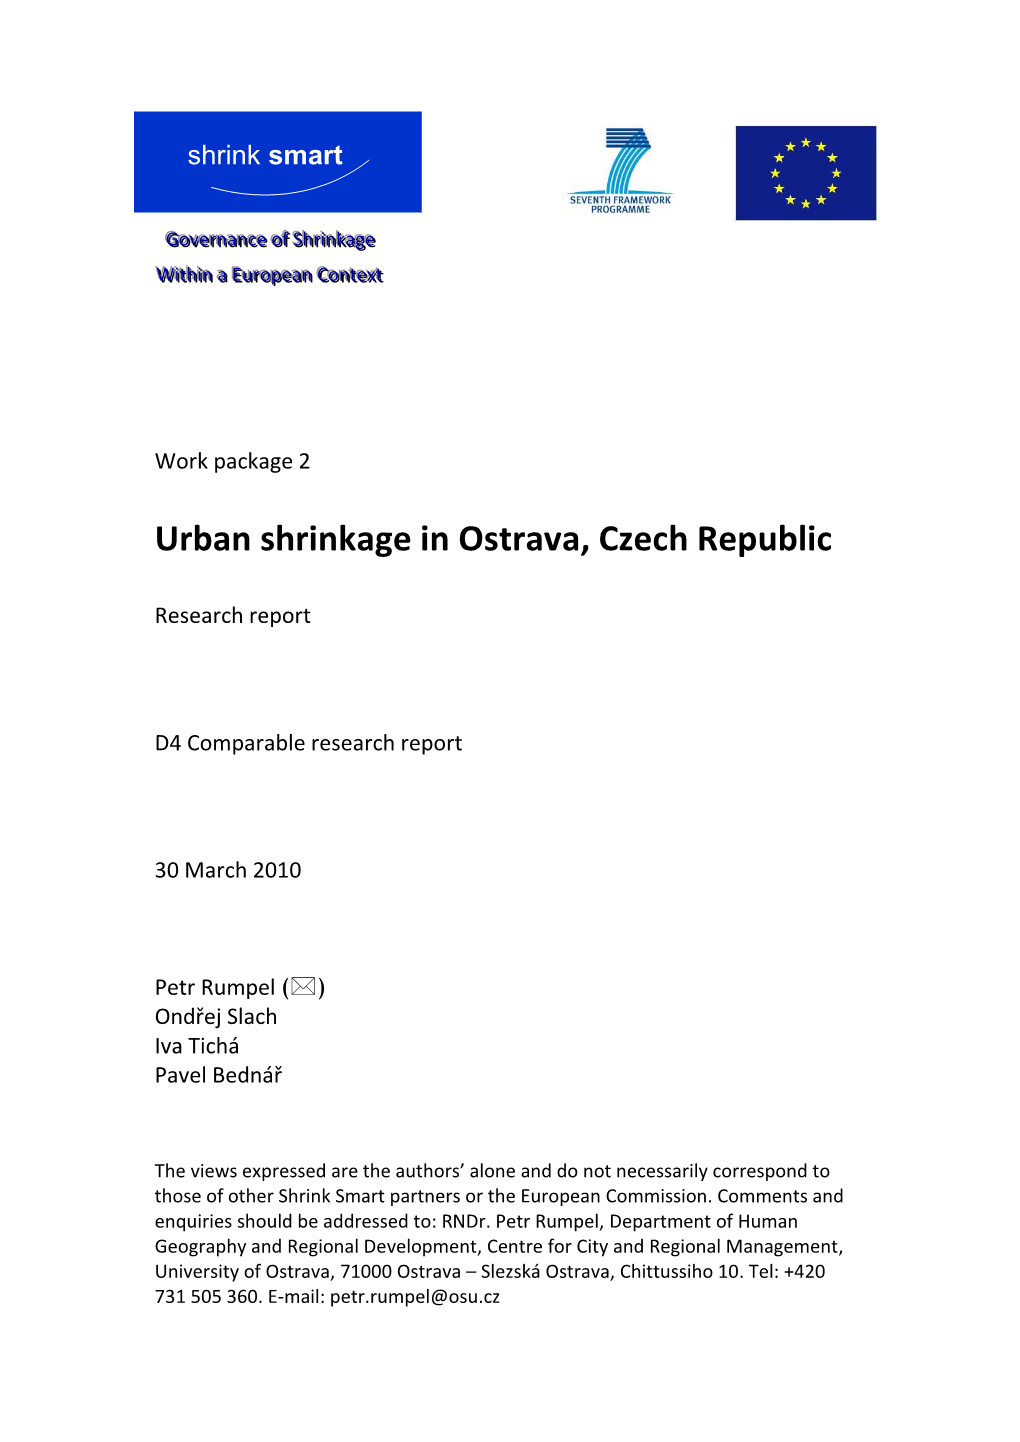 Urban Shrinkage in Ostrava, Czech Republic